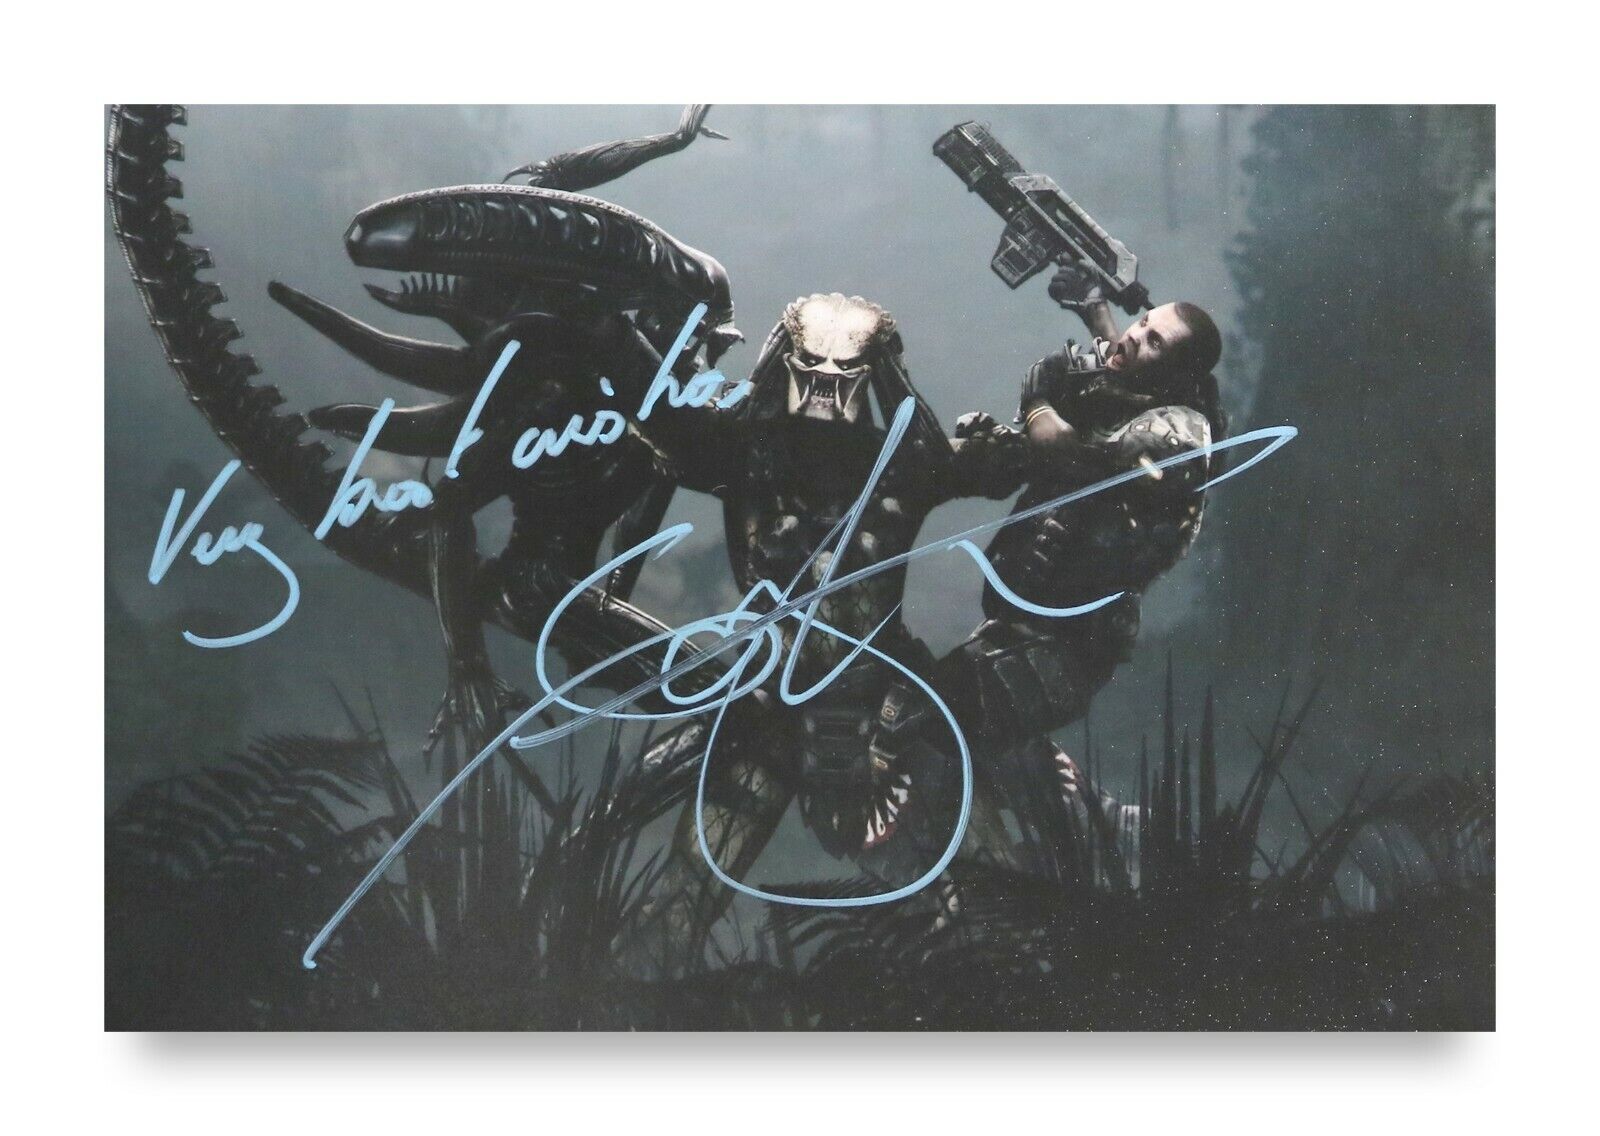 Ian Whyte Signed 6x4 Photo Poster painting Alien Vs. Predator GOT Autograph Memorabilia + COA